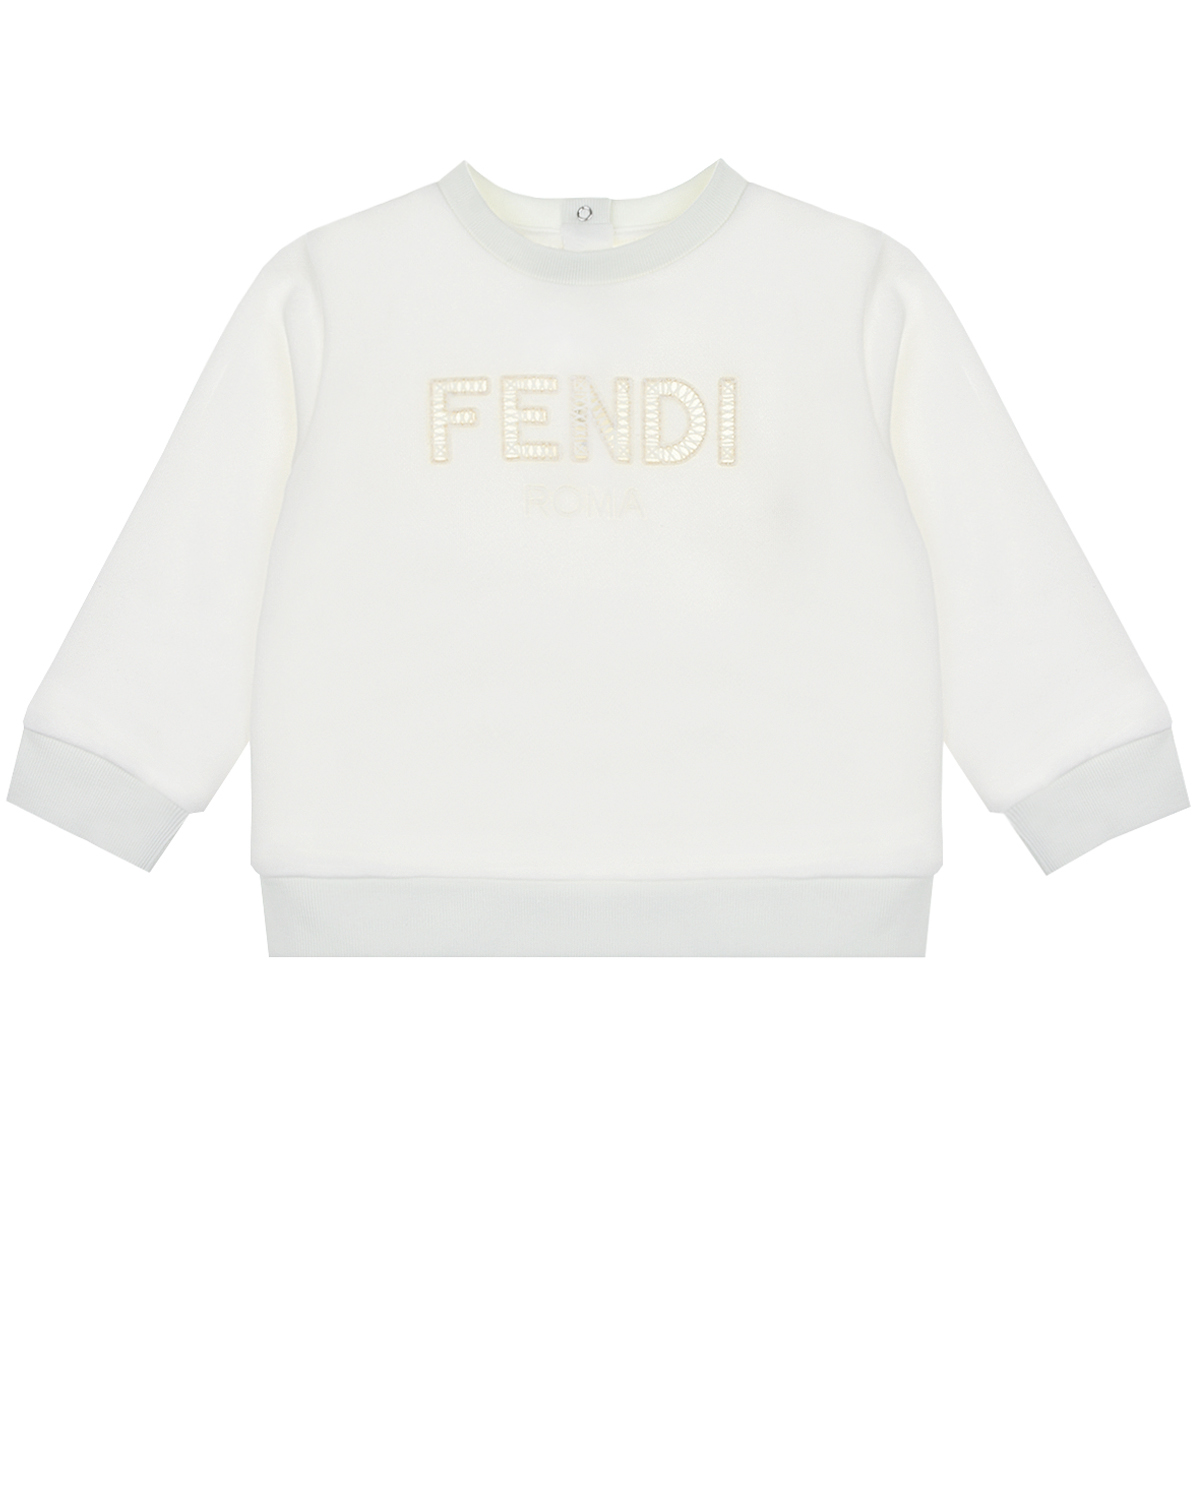 Белый свитшот с блестящим логотипом Fendi